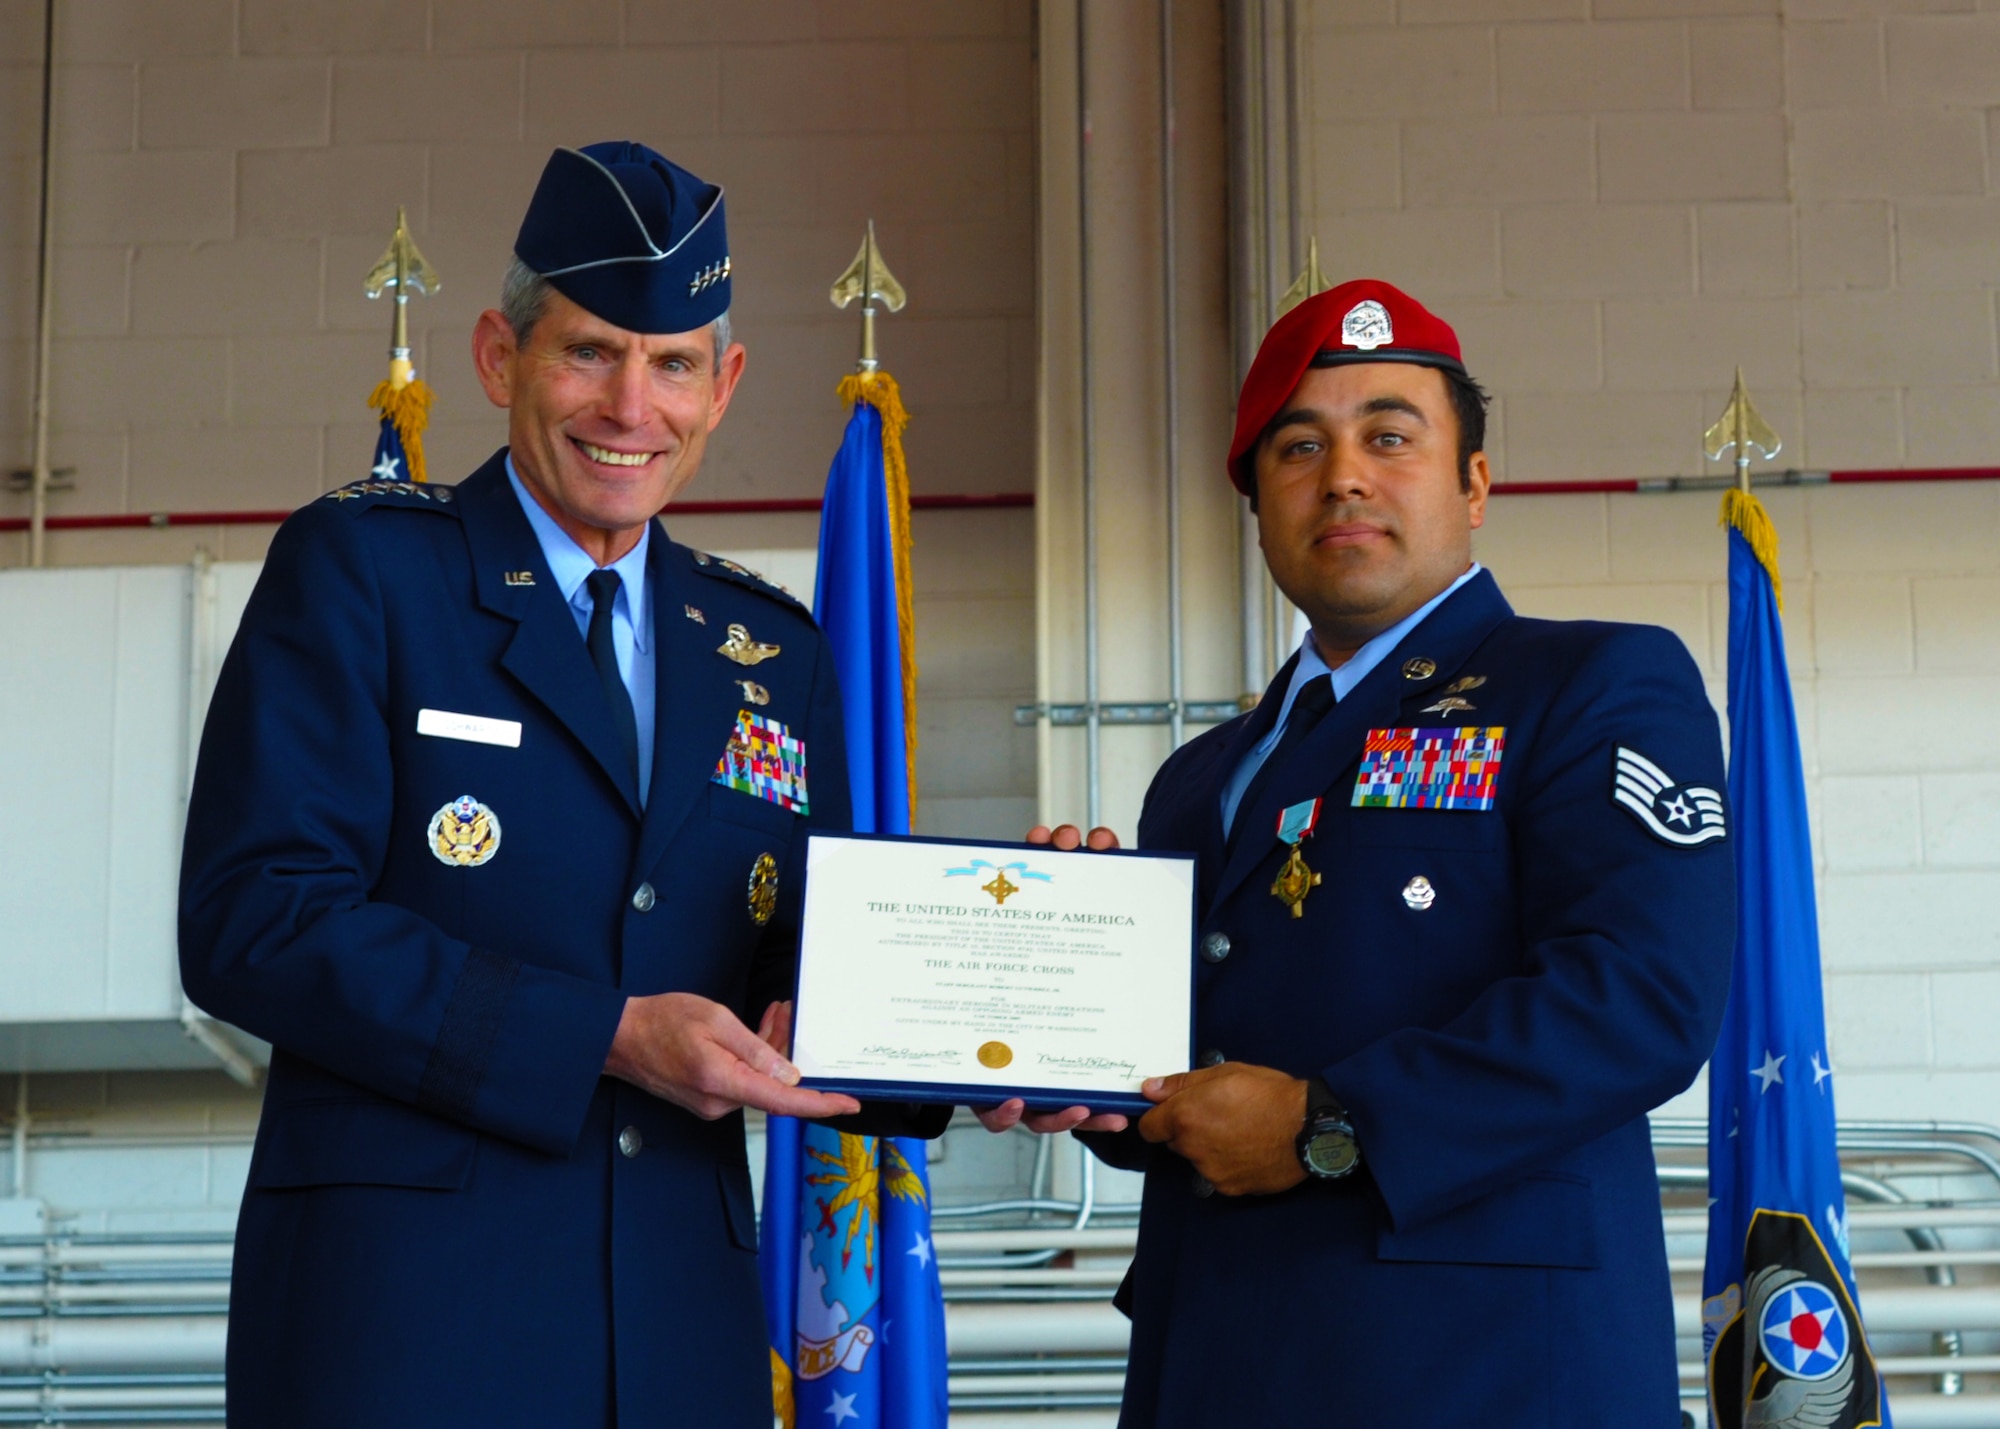 Gen. Norton Schwartz, Chief of Staff of the U.S. Air Force, presents the Air Force Cross to Staff Sgt. Robert Gutierrez